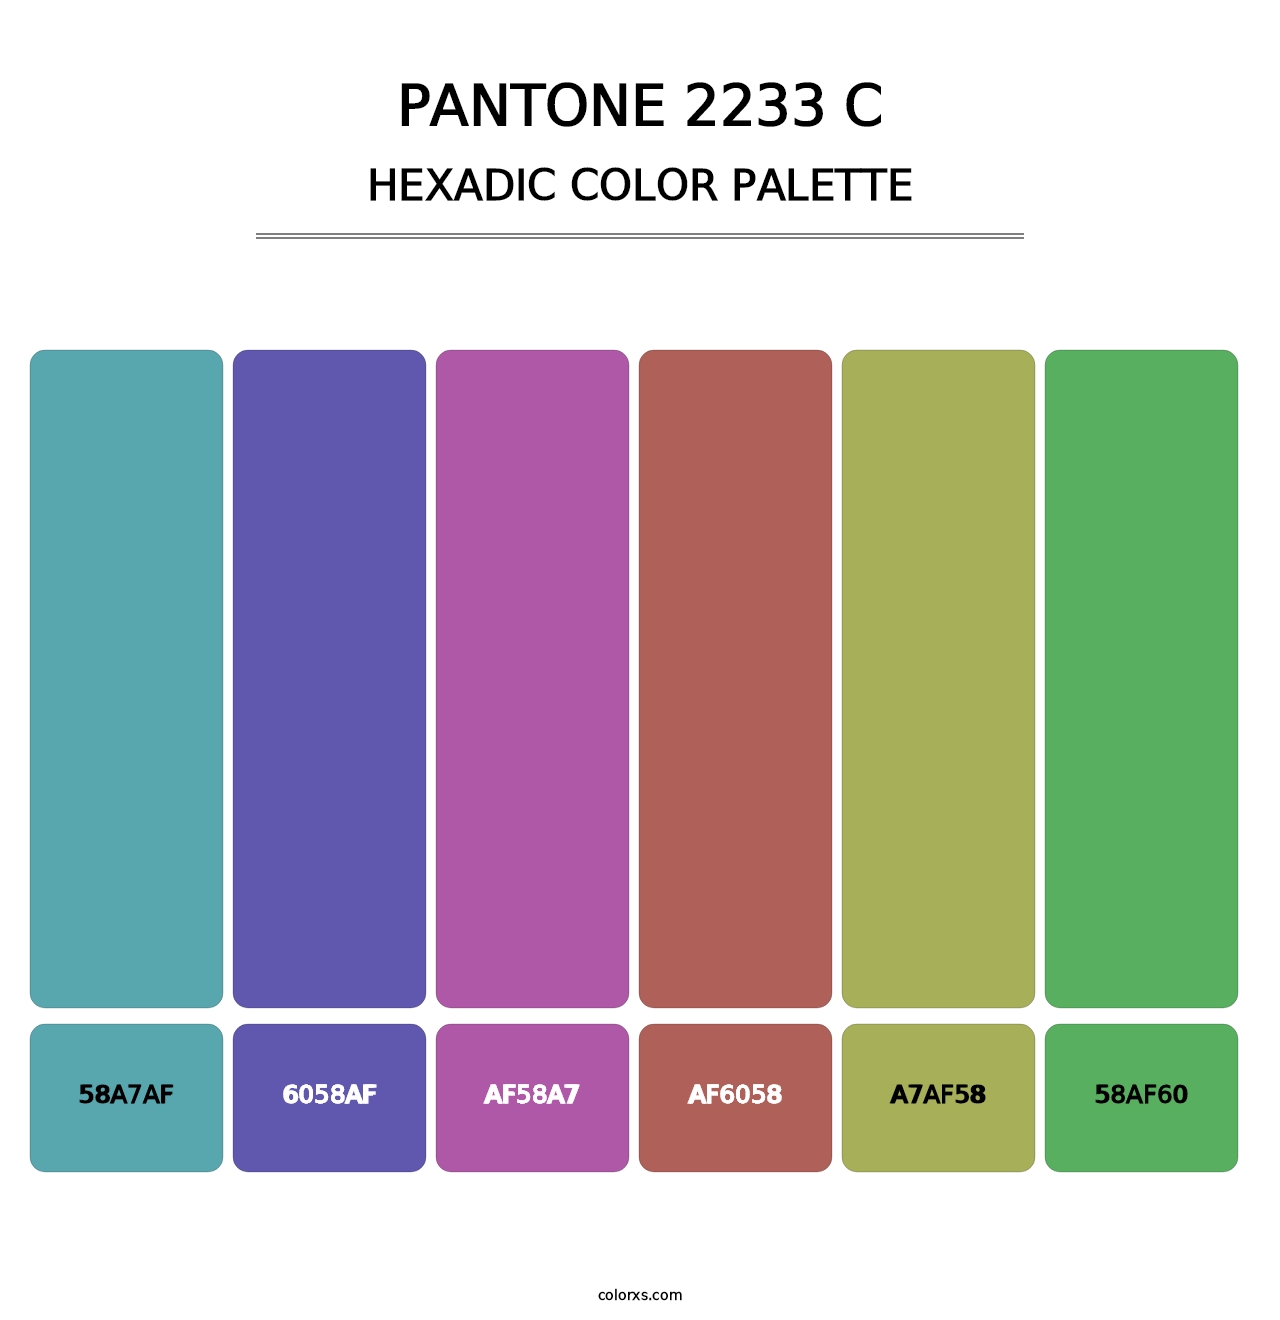 PANTONE 2233 C - Hexadic Color Palette